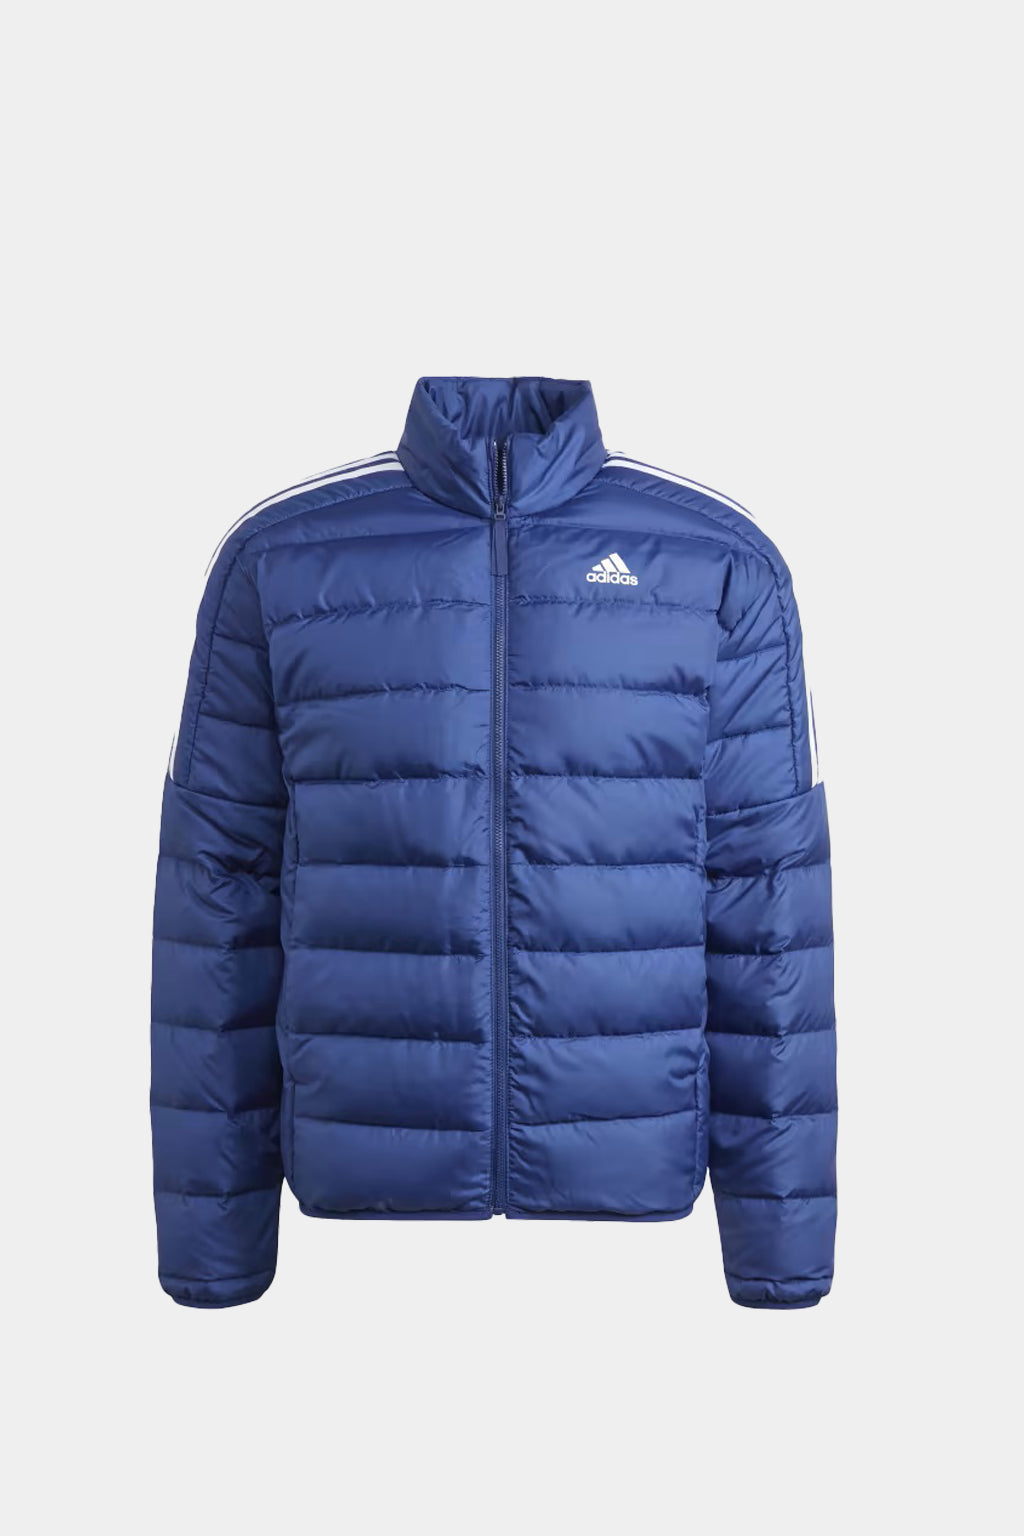 Adidas - Terrex Ess Down Jacket